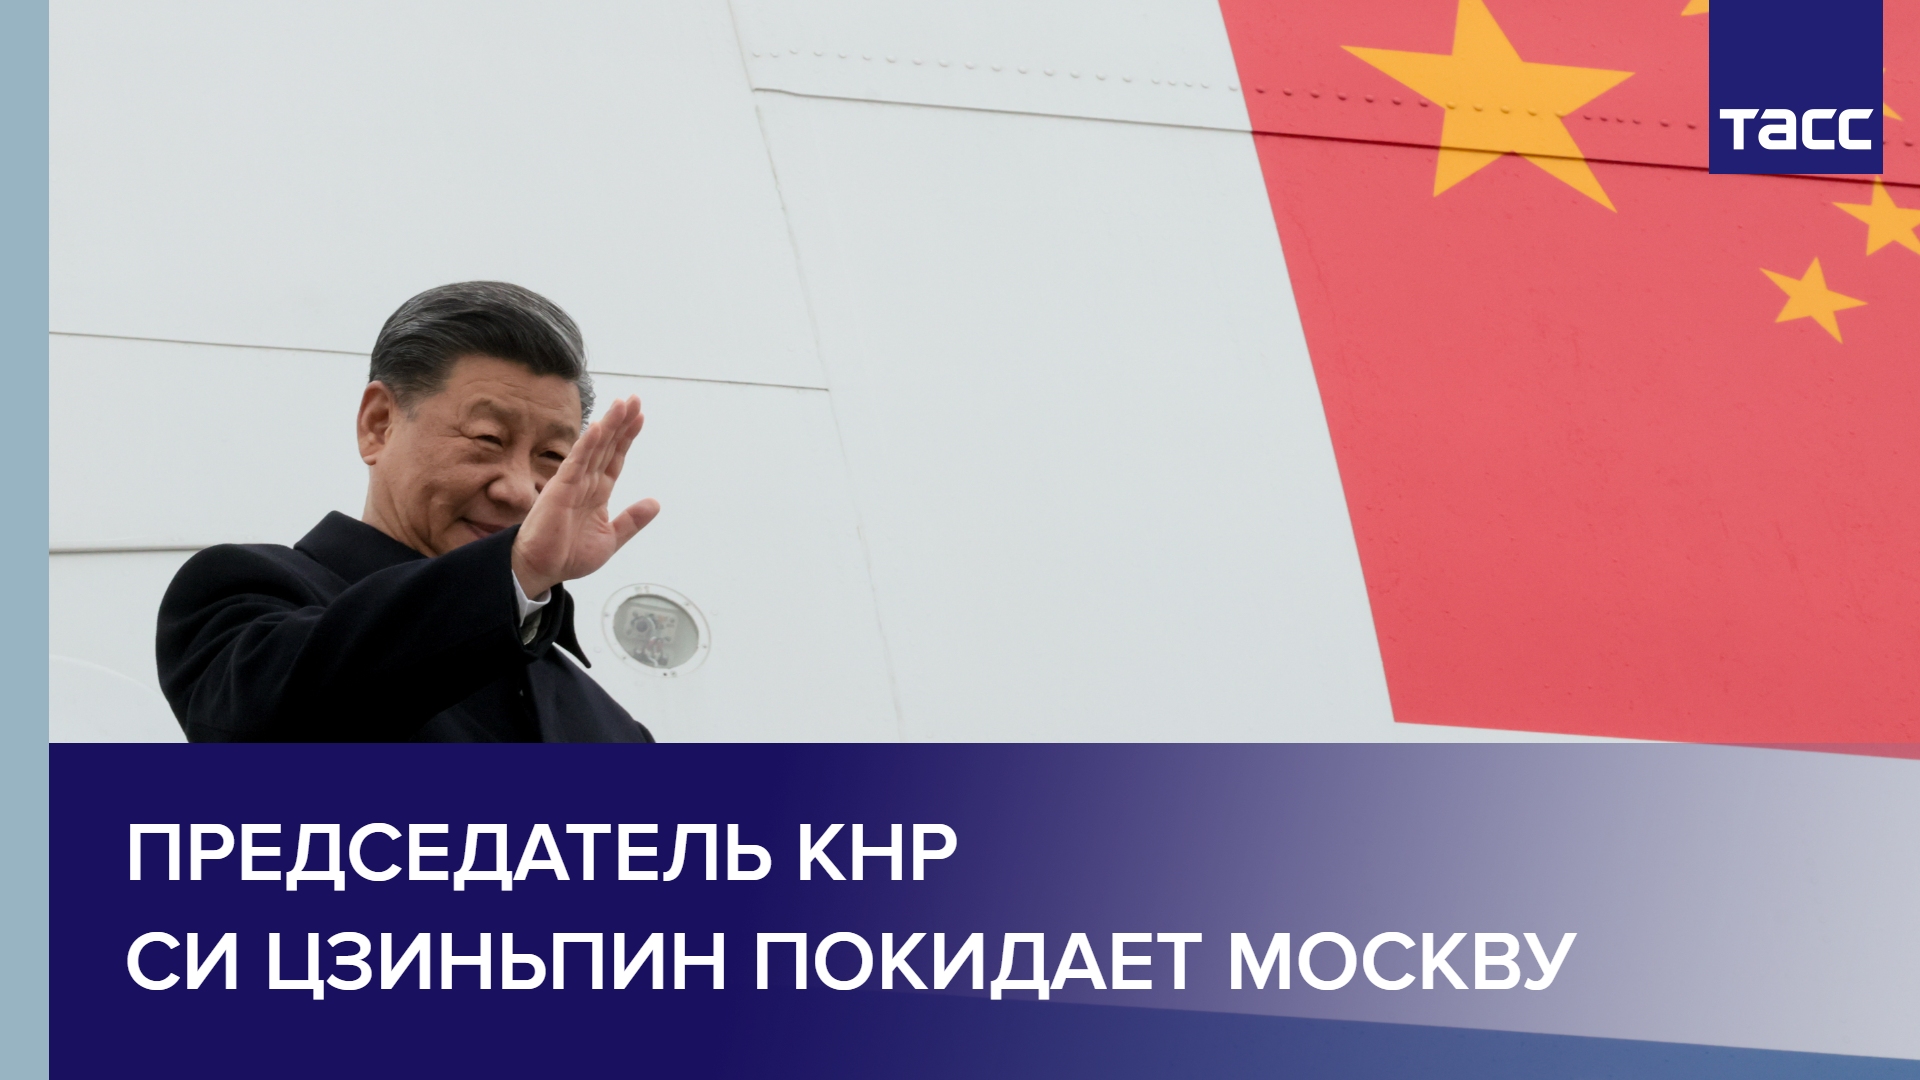 Председатель КНР Си Цзиньпин покидает Москву